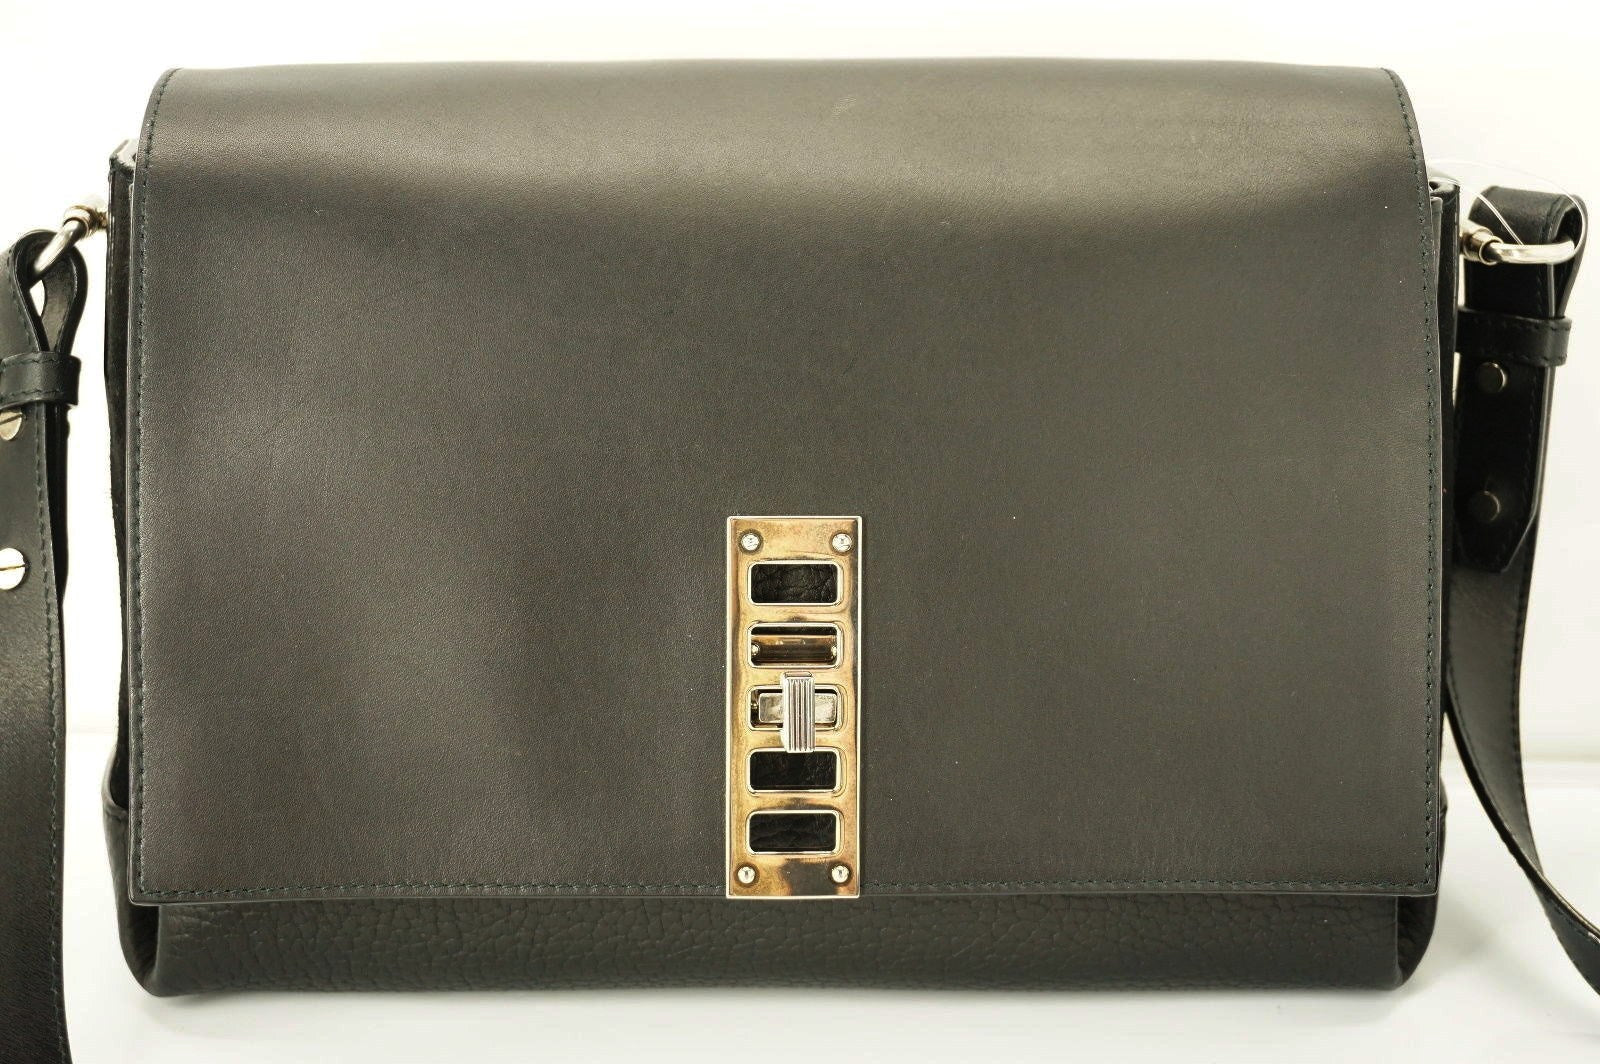 Proenza Schouler Black Leather Elliot Mini Shoulder Bag $1650 New